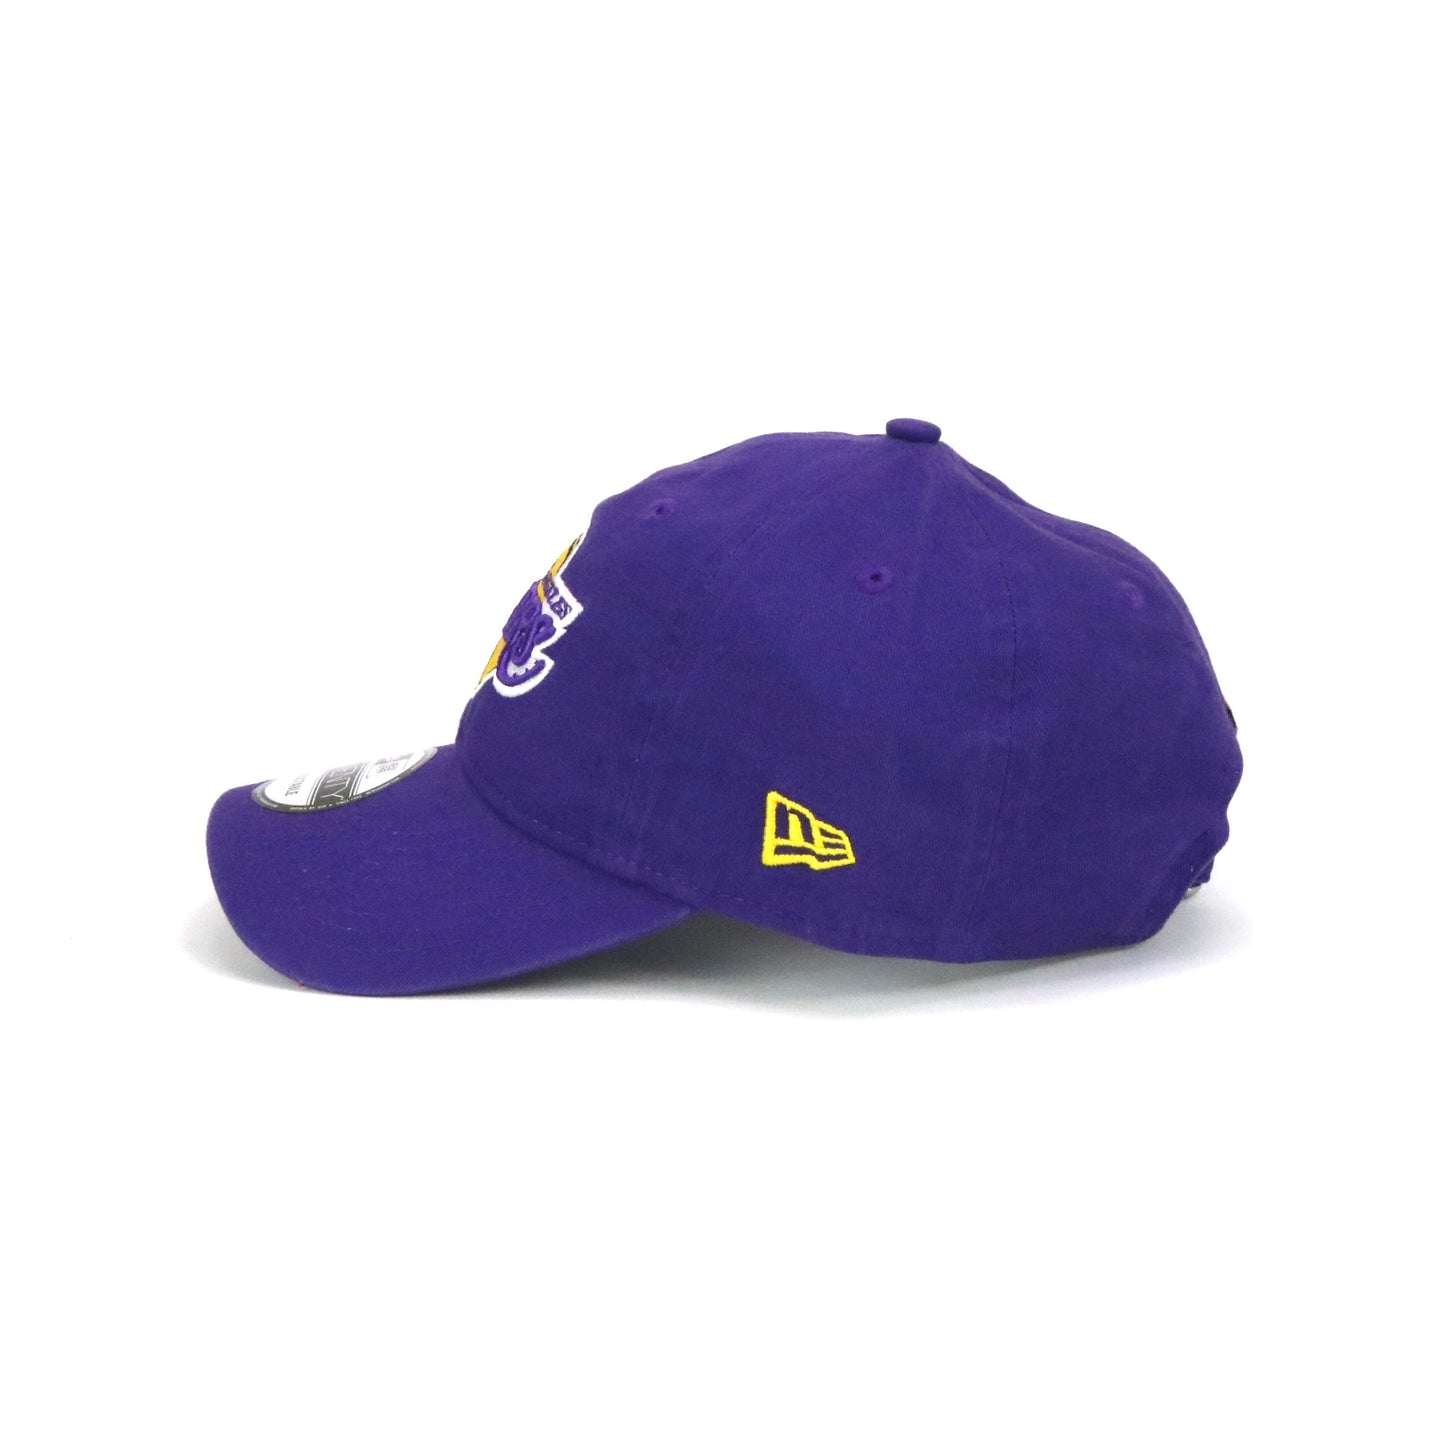 New Era 920 LA Lakers Team Colour Purple Gold Wash Cap for men